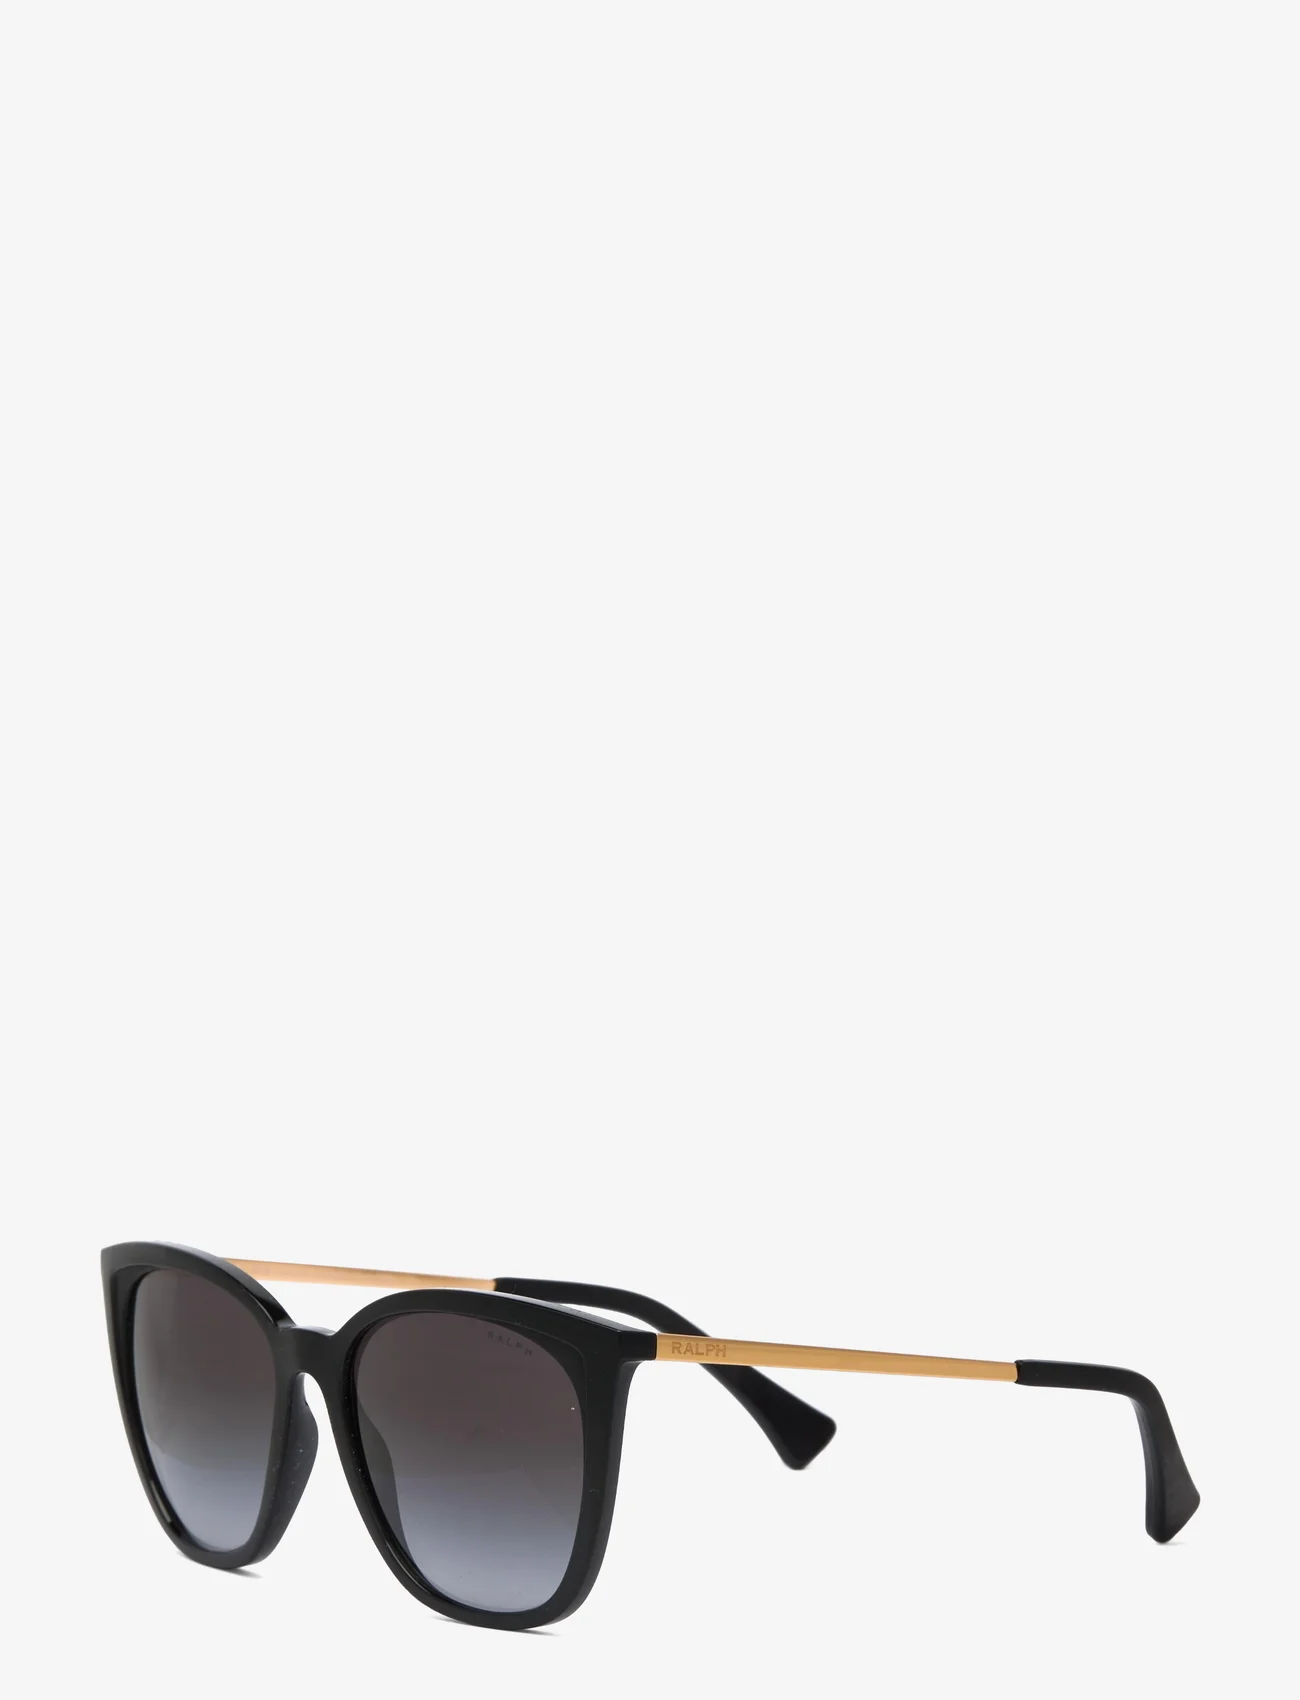 Ralph Ralph Lauren Sunglasses - 0RA5280 - cateye solbriller - shiny black - 1